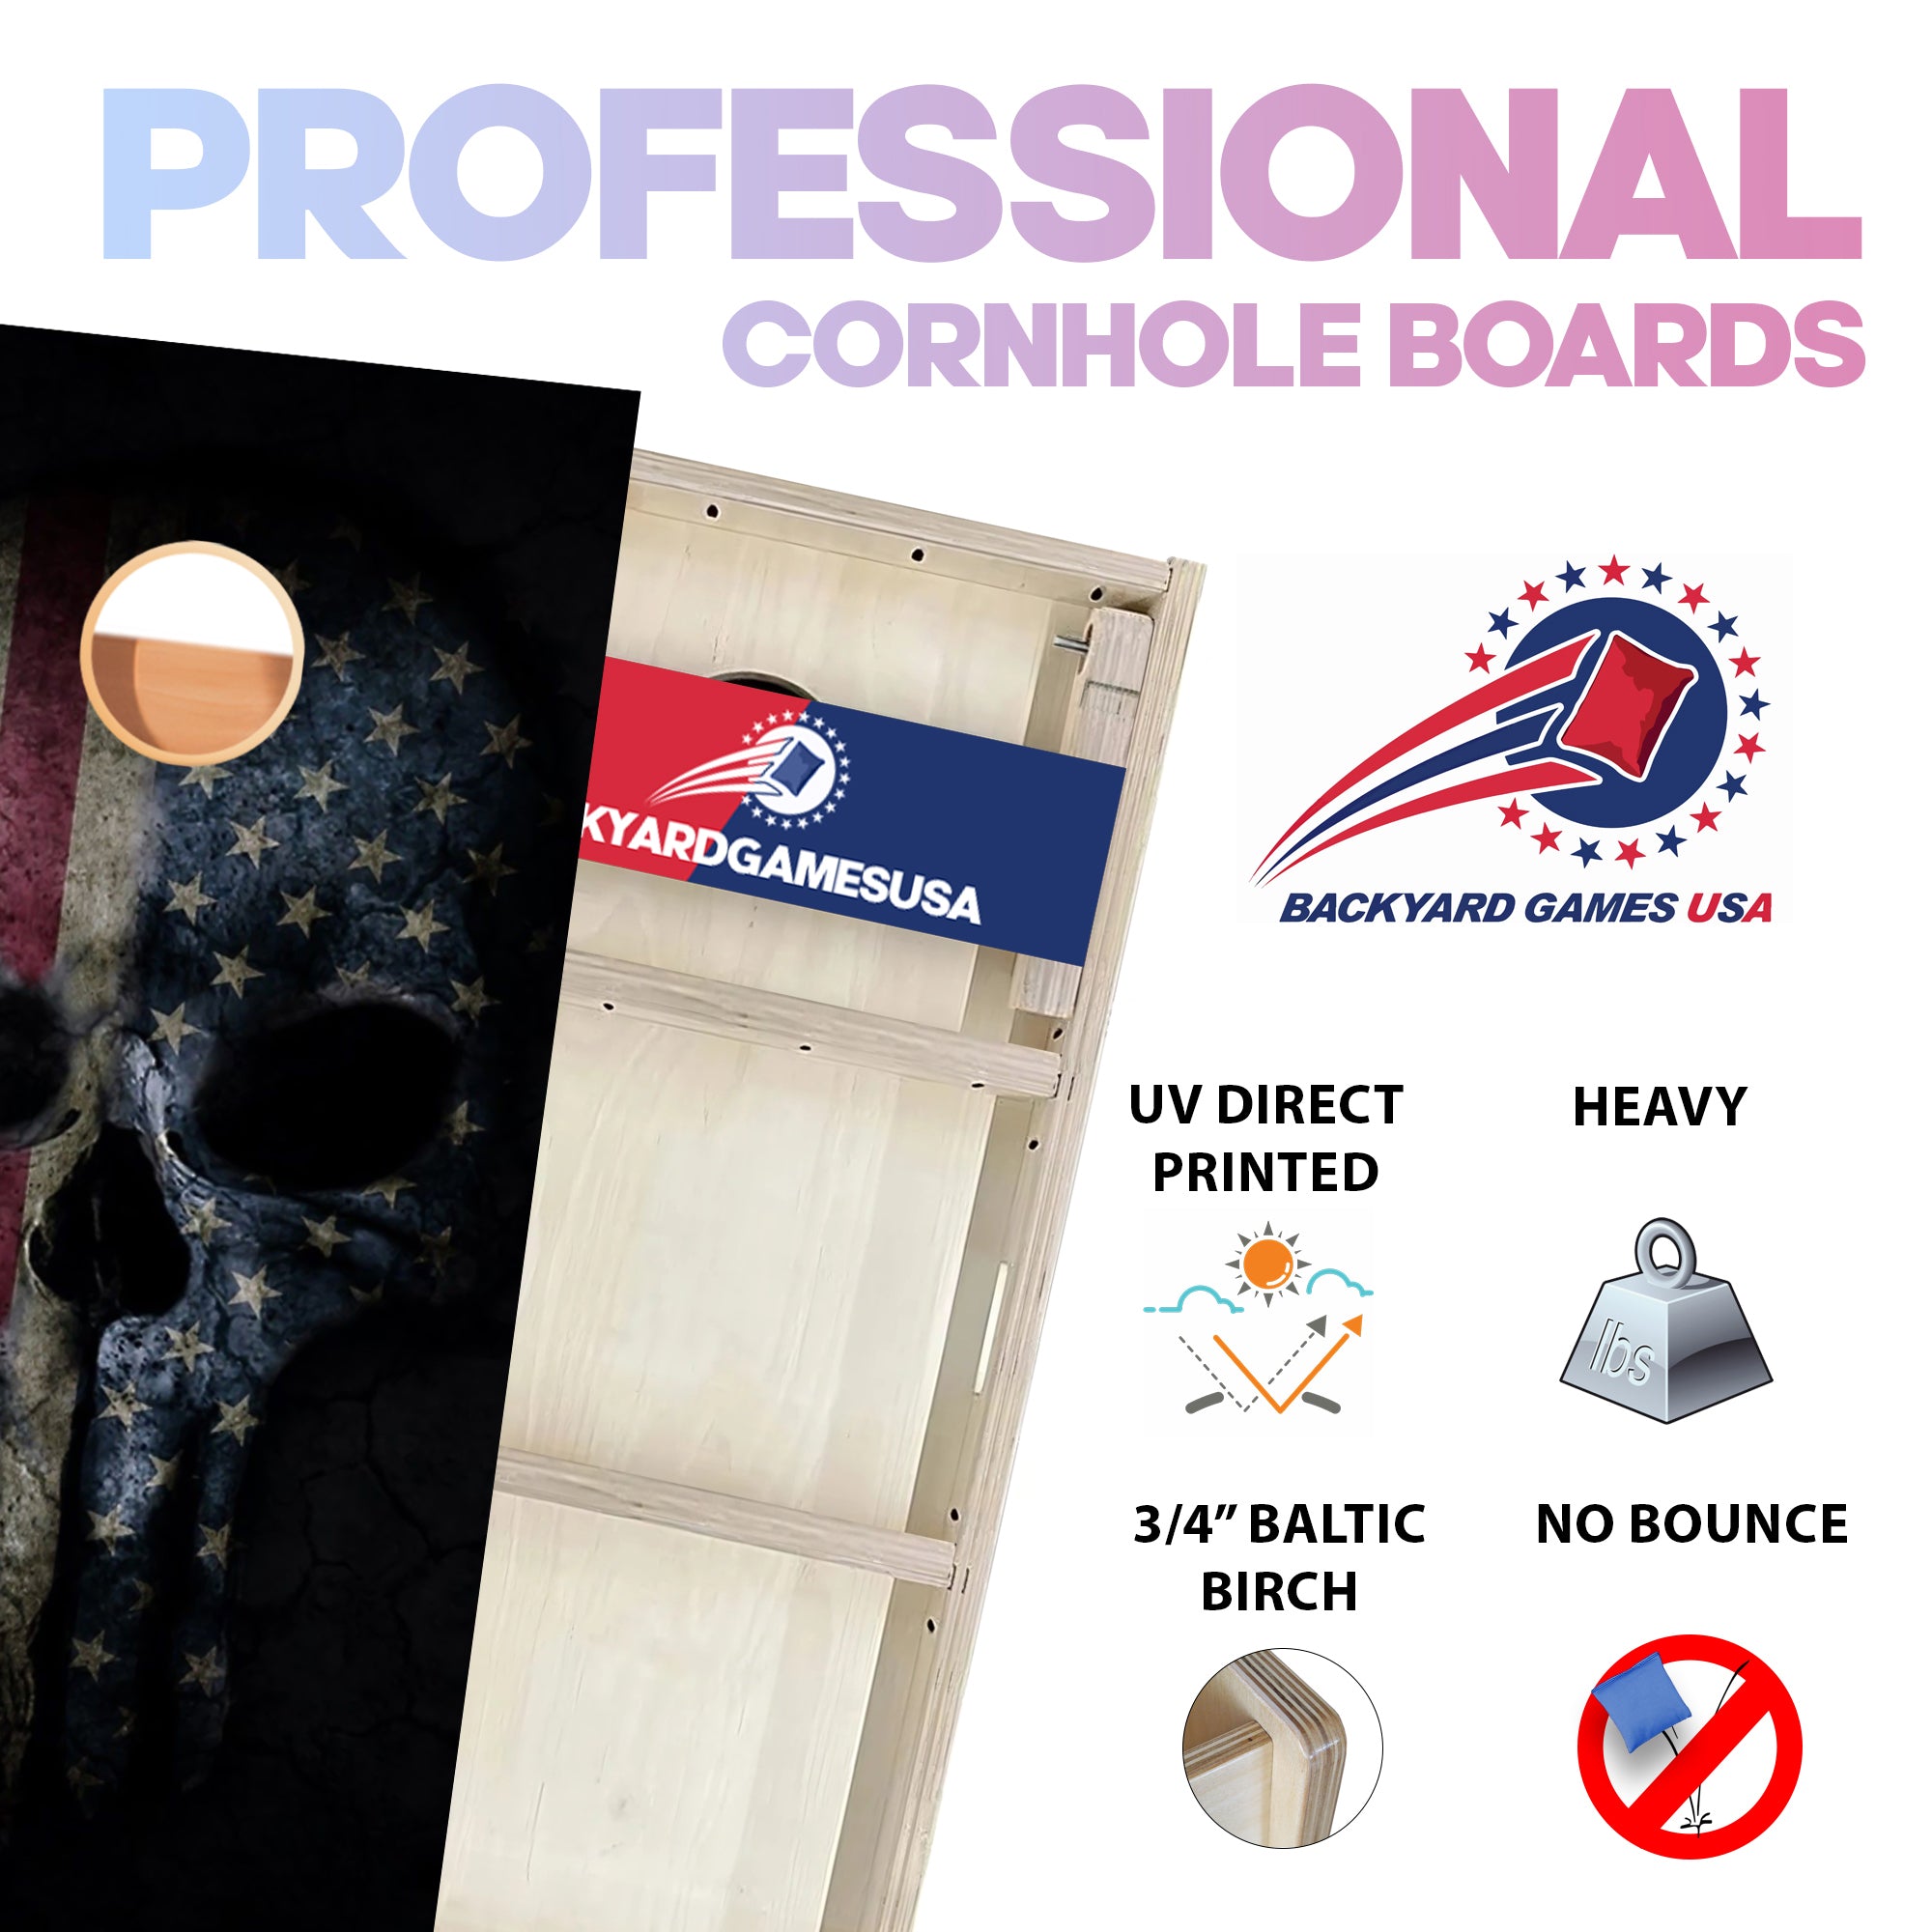 Faded Skull Professional Cornhole Boards